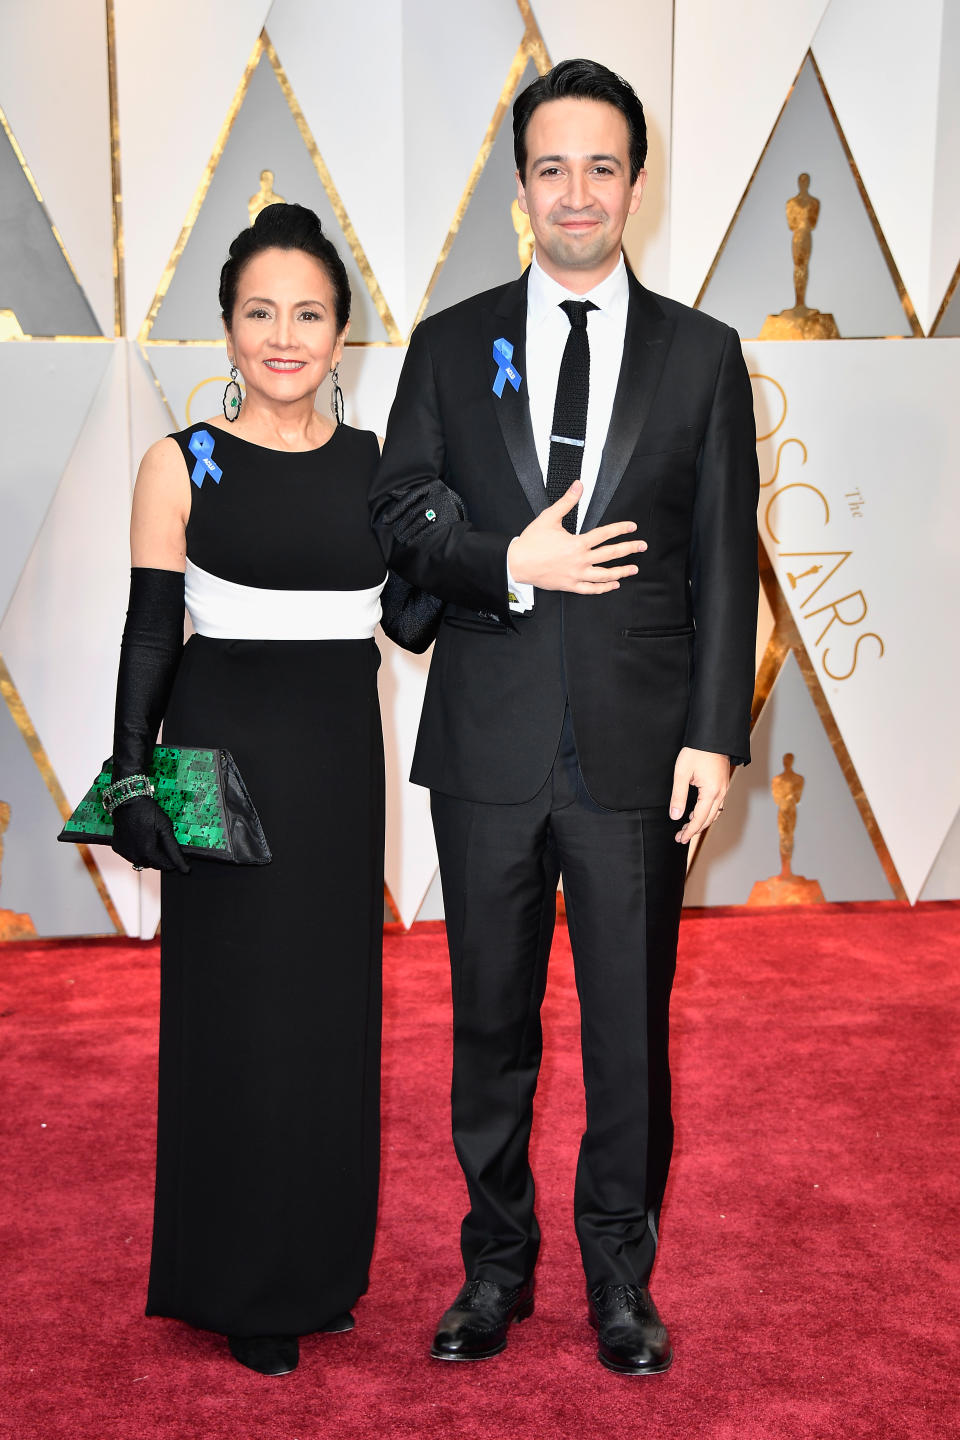 Lin-Manuel Miranda and his mom, Luz Towns-Miranda, at the Academy Awards in 2017. (Photo: Getty Images)